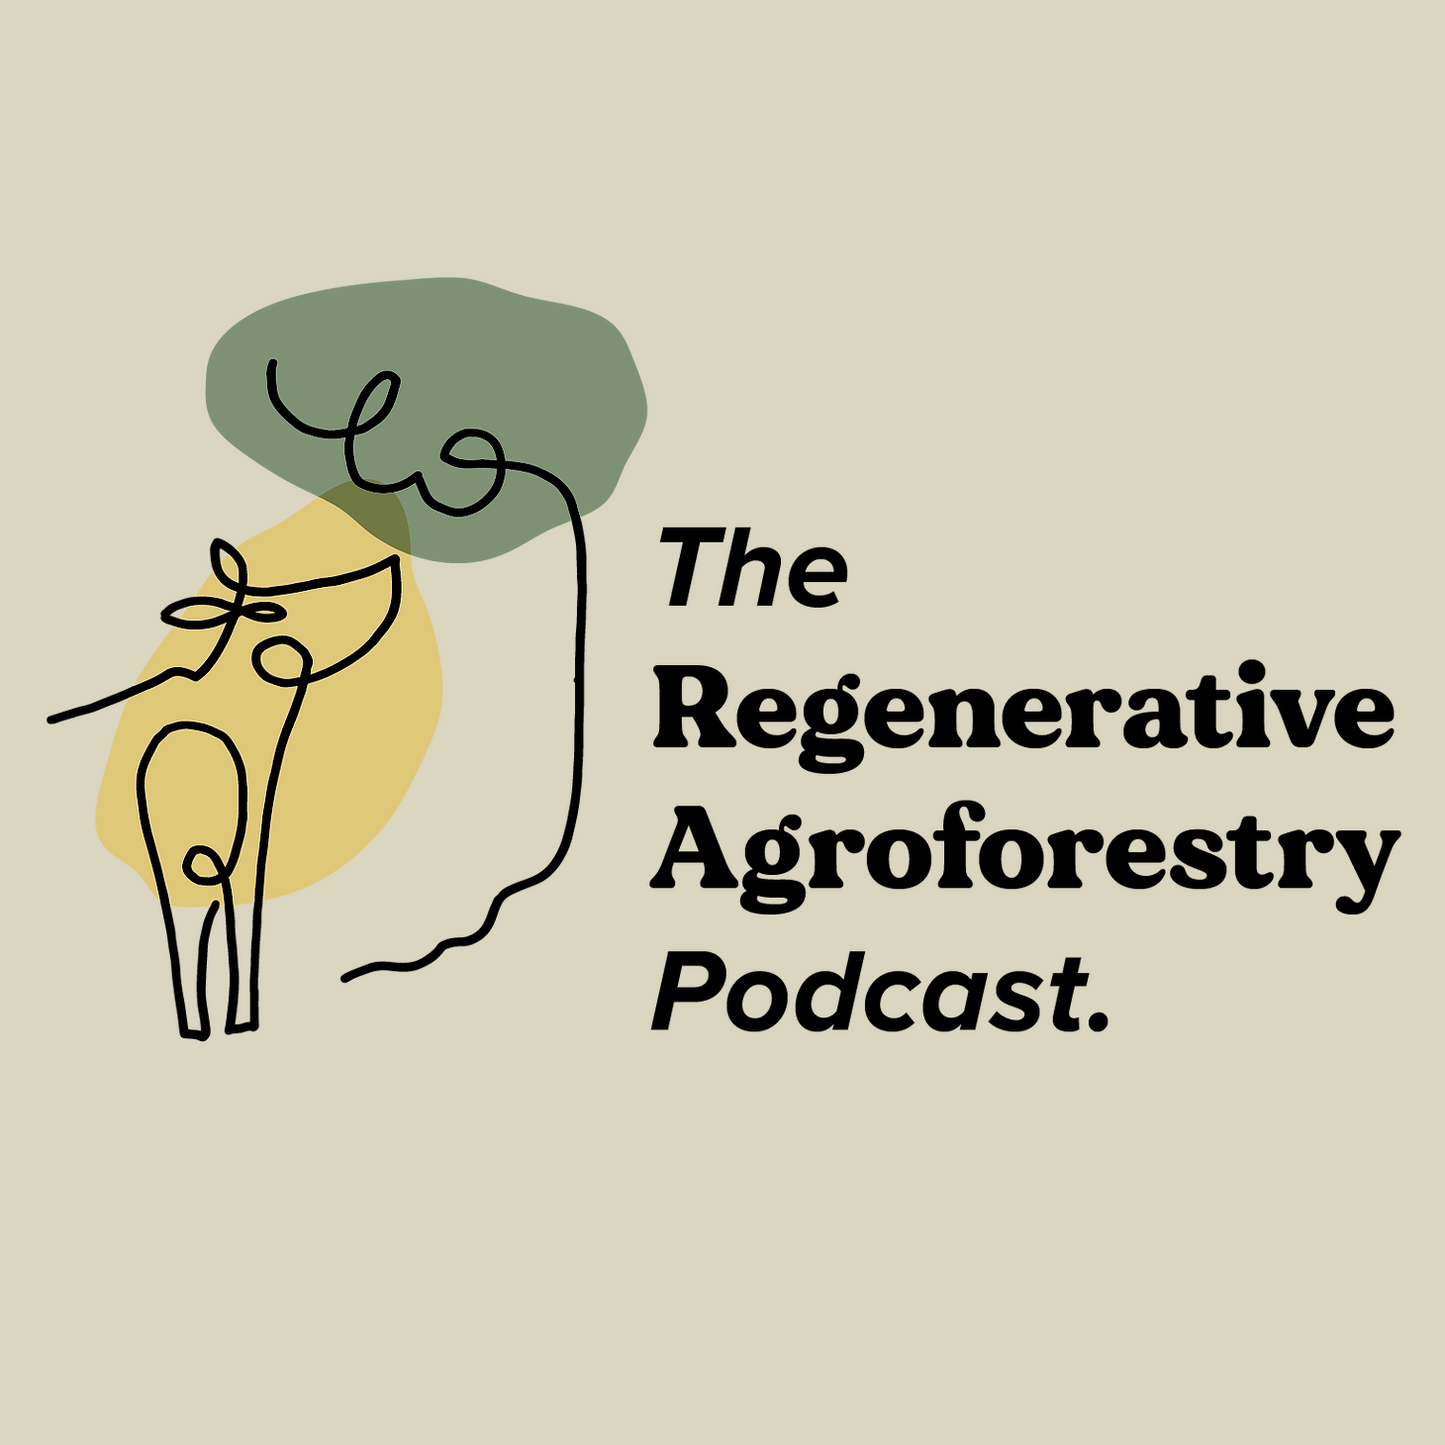 Podcast - The Regenerative Agroforestry Podcast